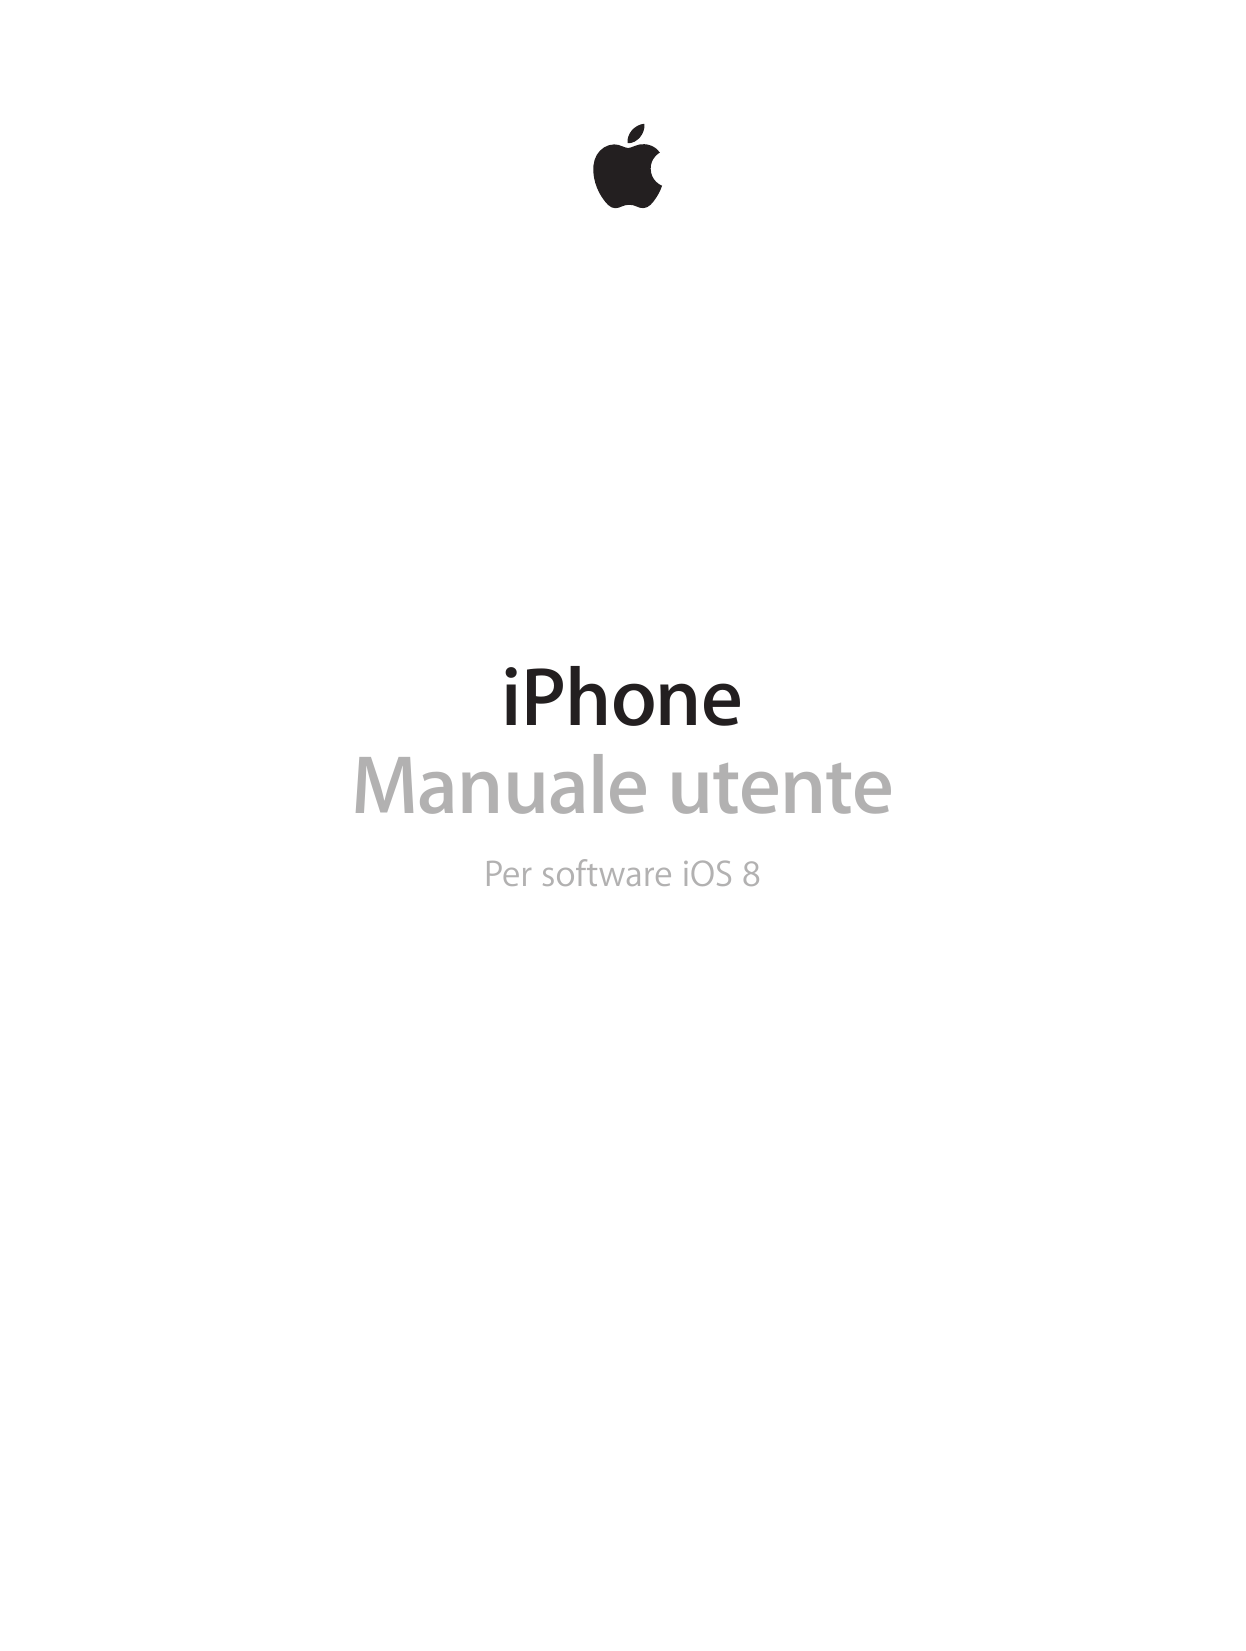 iPhoneManuale utentePer software iOS 8